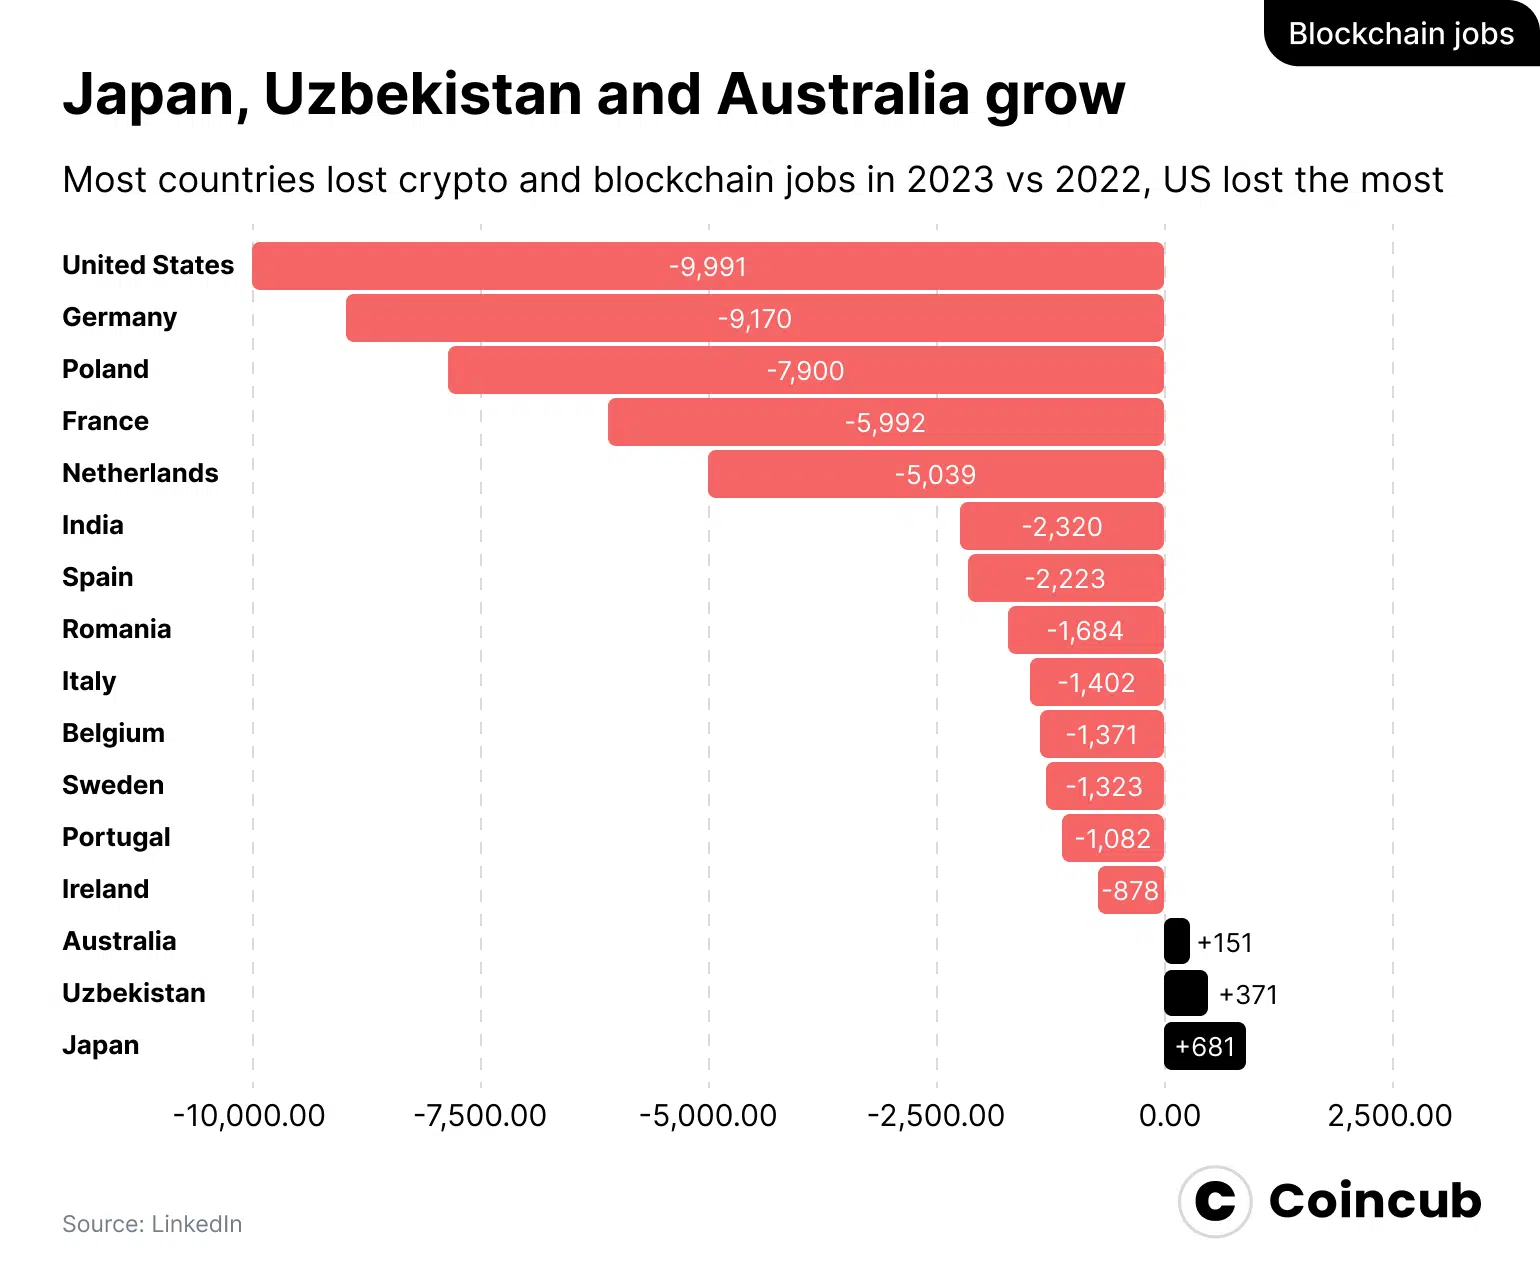 Blockchain jobs per country 2023 vs 2022